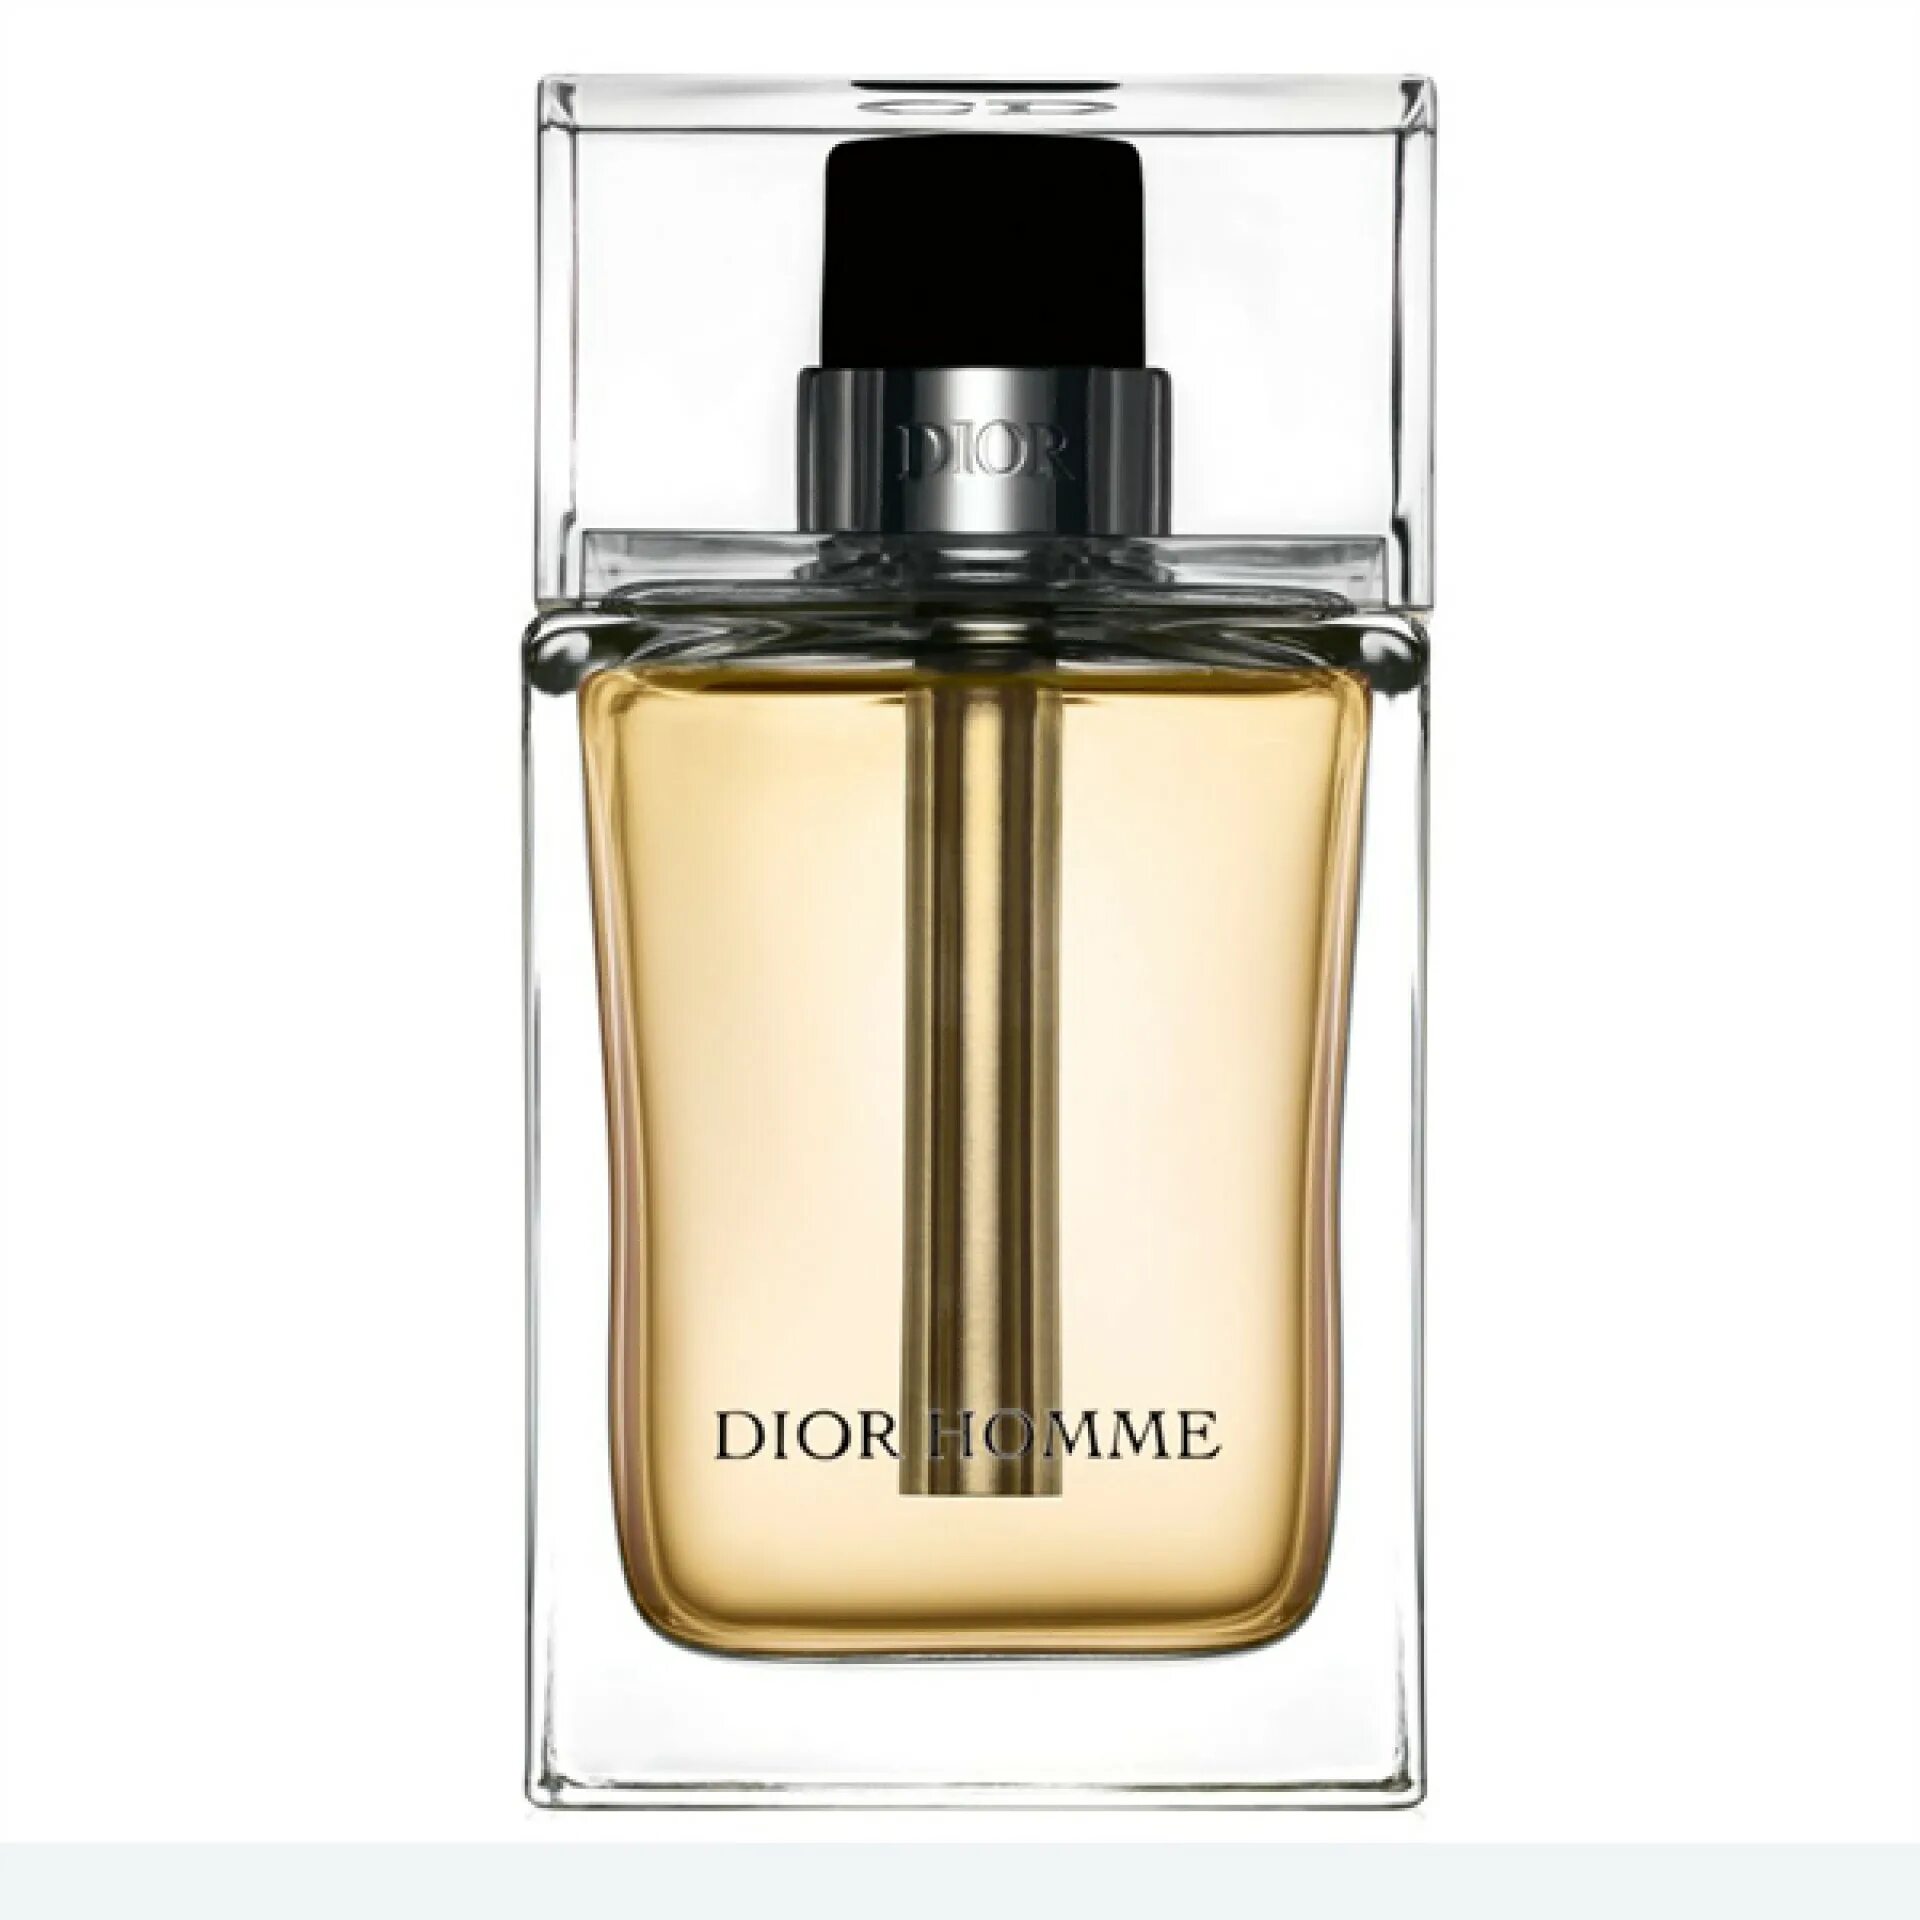 Christian Dior homme, 100 ml. Christian Dior Dior homme 100 мл. Christian Dior homme EDT 150ml. Туалетная вода Dior homme 50 мл.